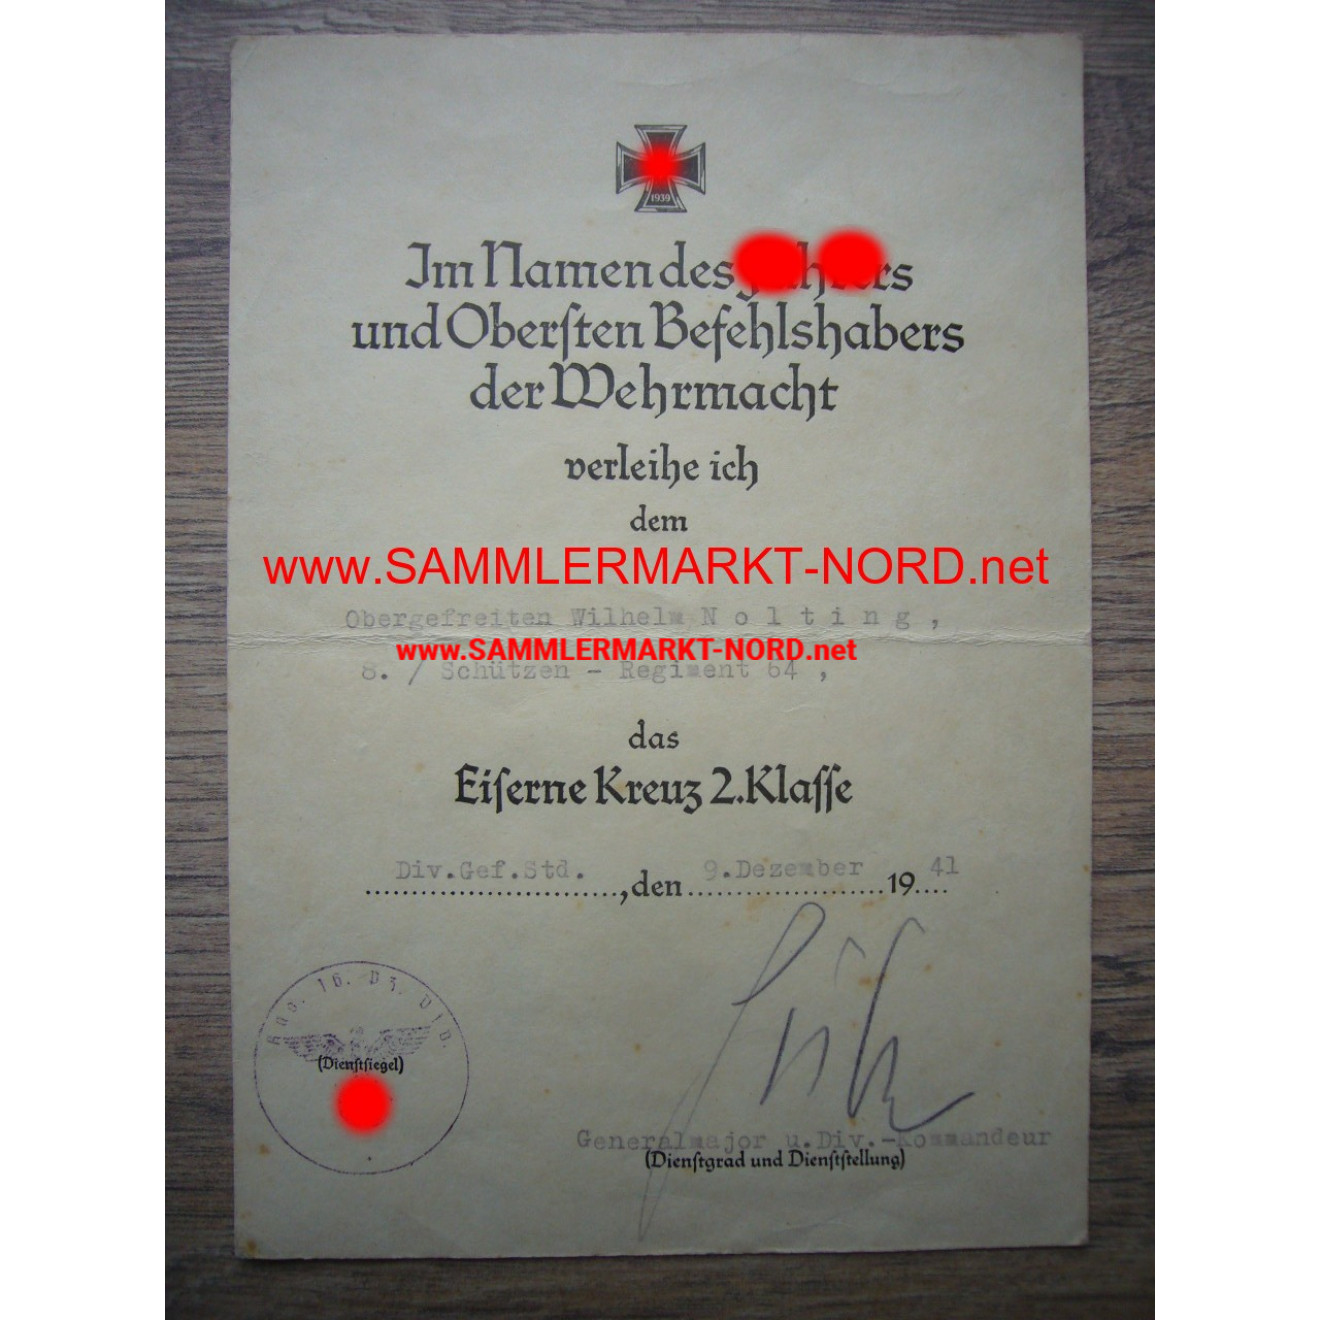 Major General HANS-VALENTIN HUBE (diamonds) - autograph